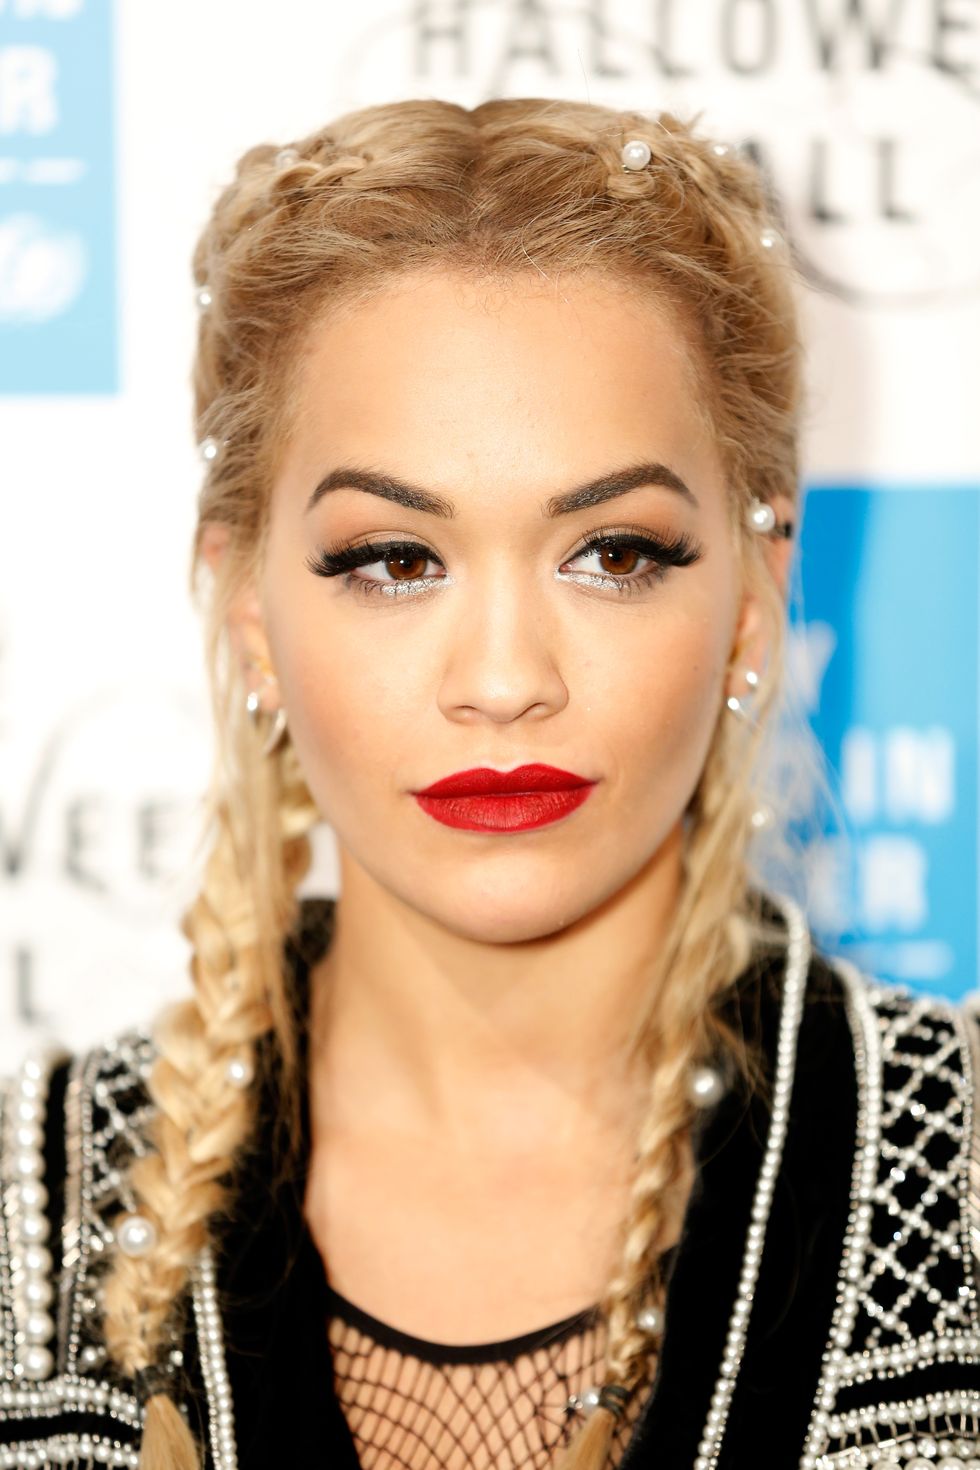 The iconic lipsticks celebrities wear - Rita Ora